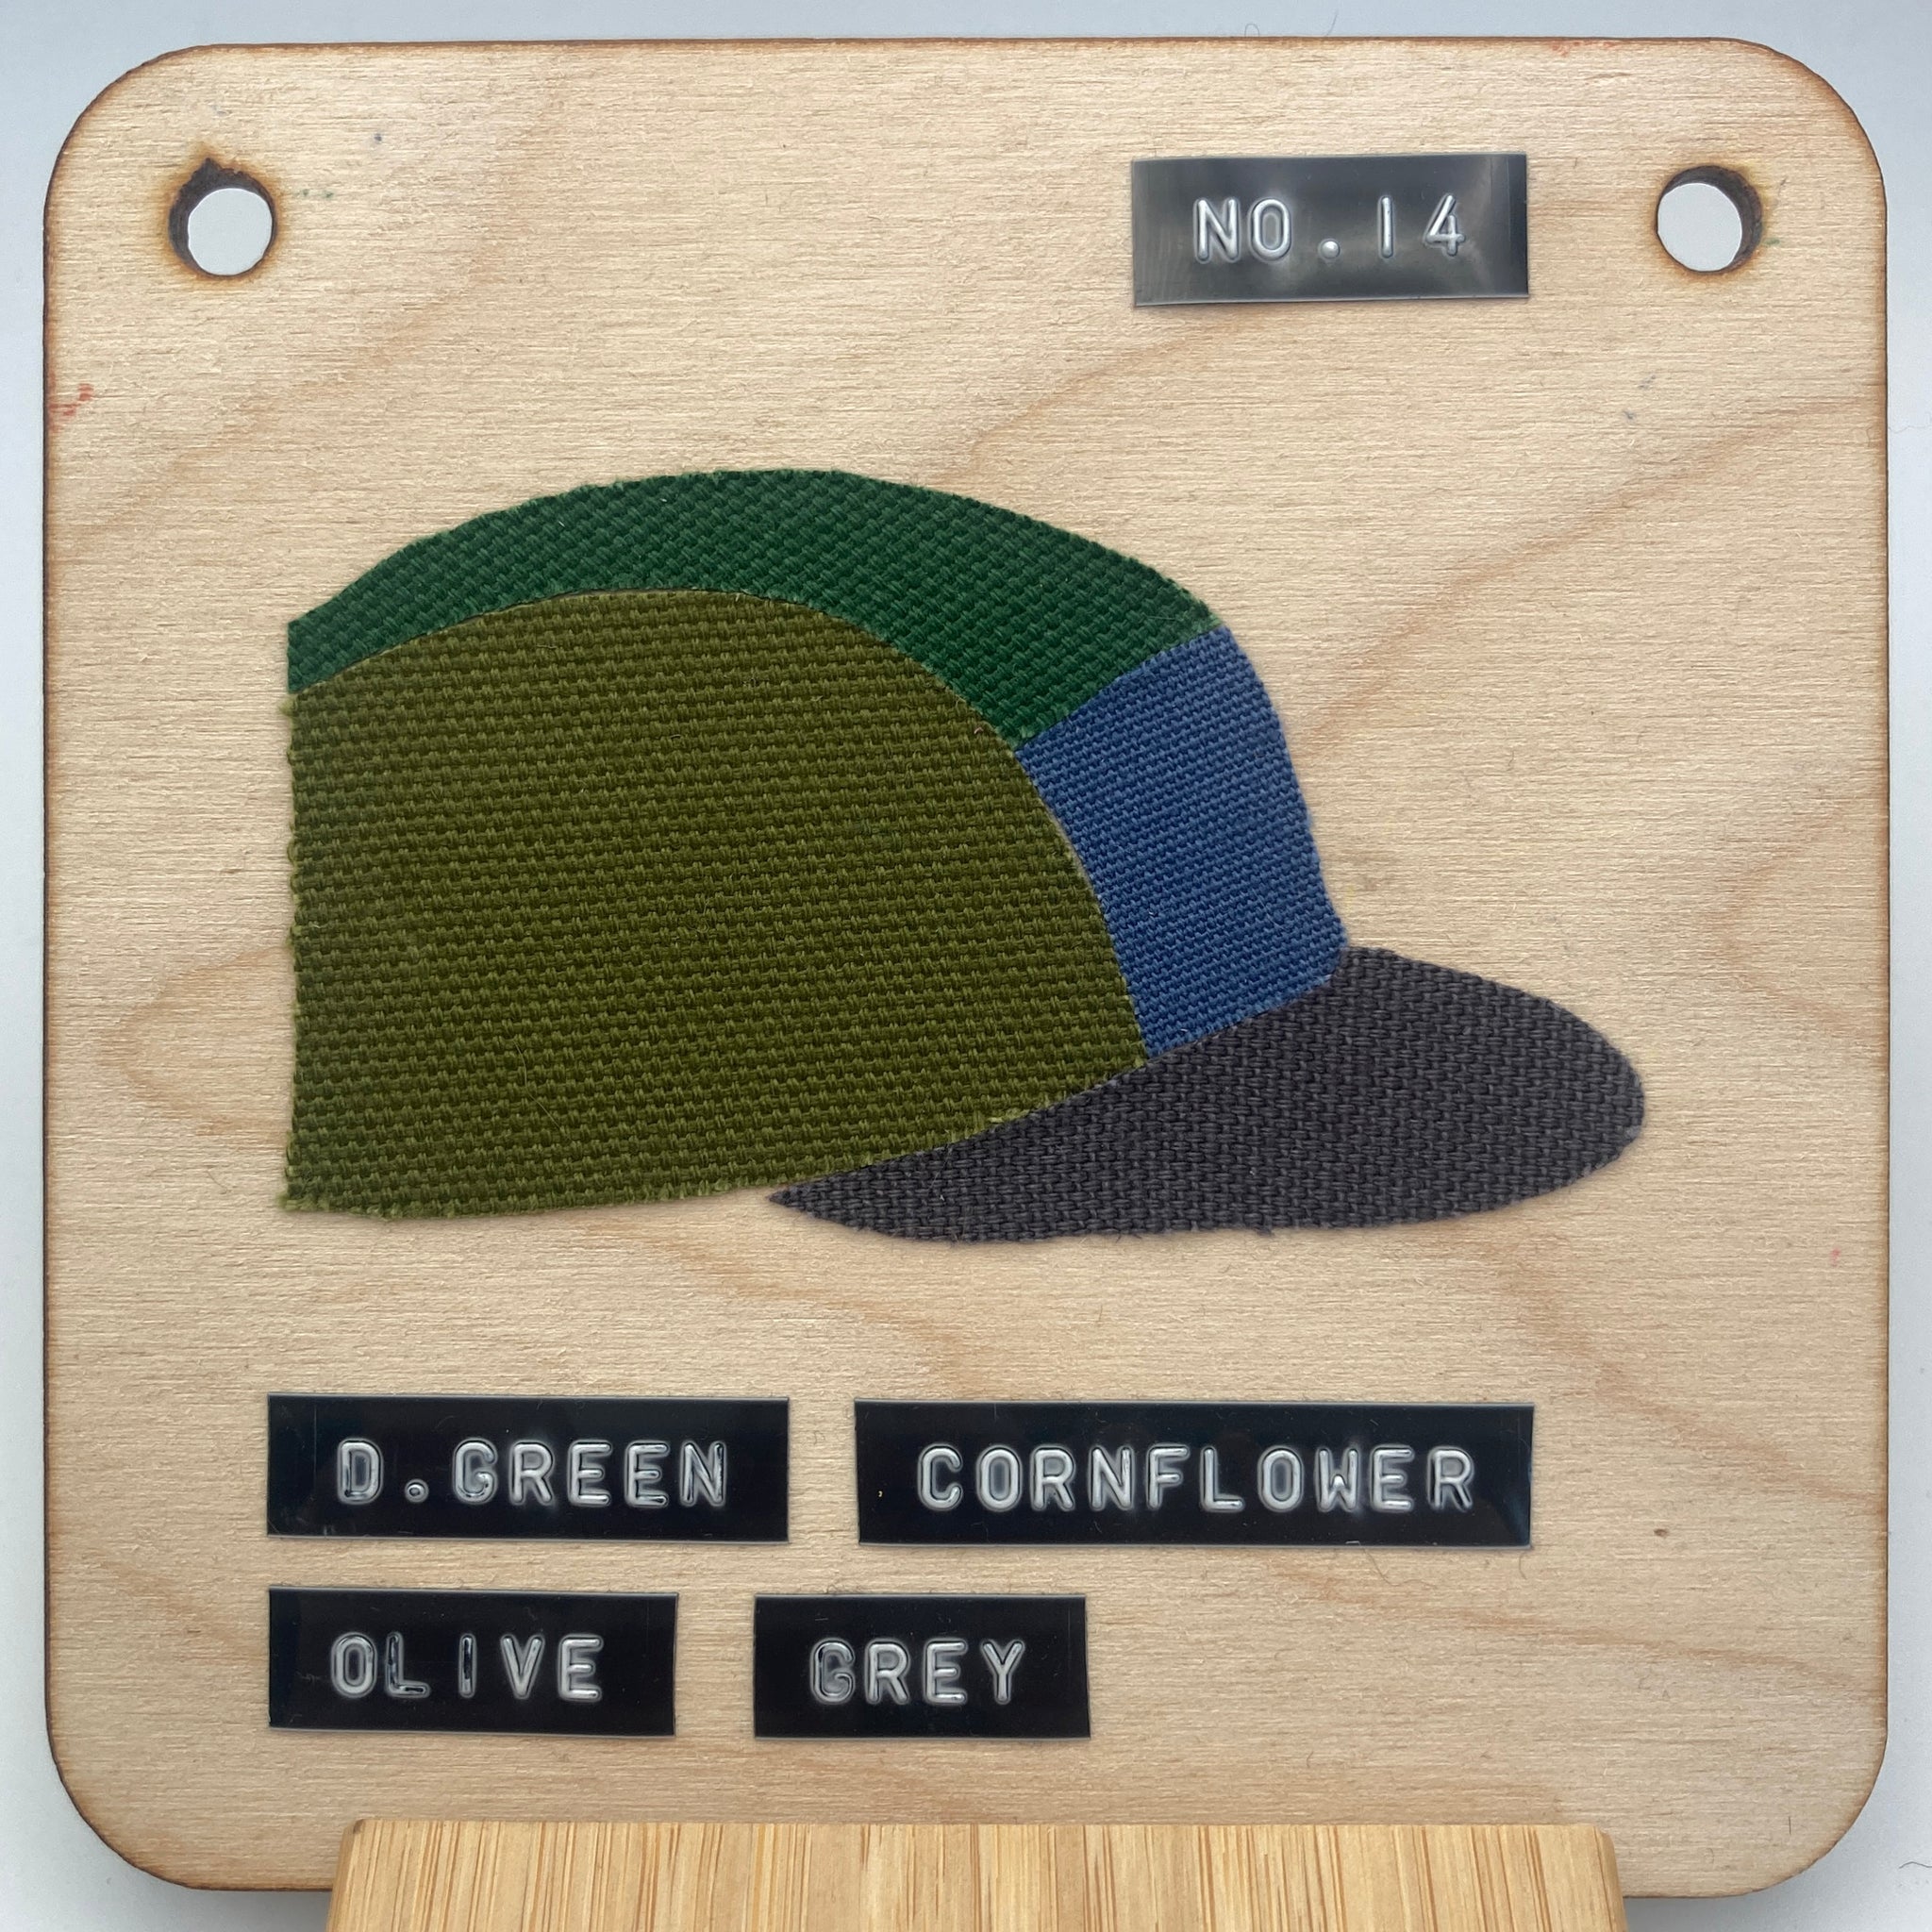 No 14 Dark Green, Cornflower Blue and Olive Panel Cap